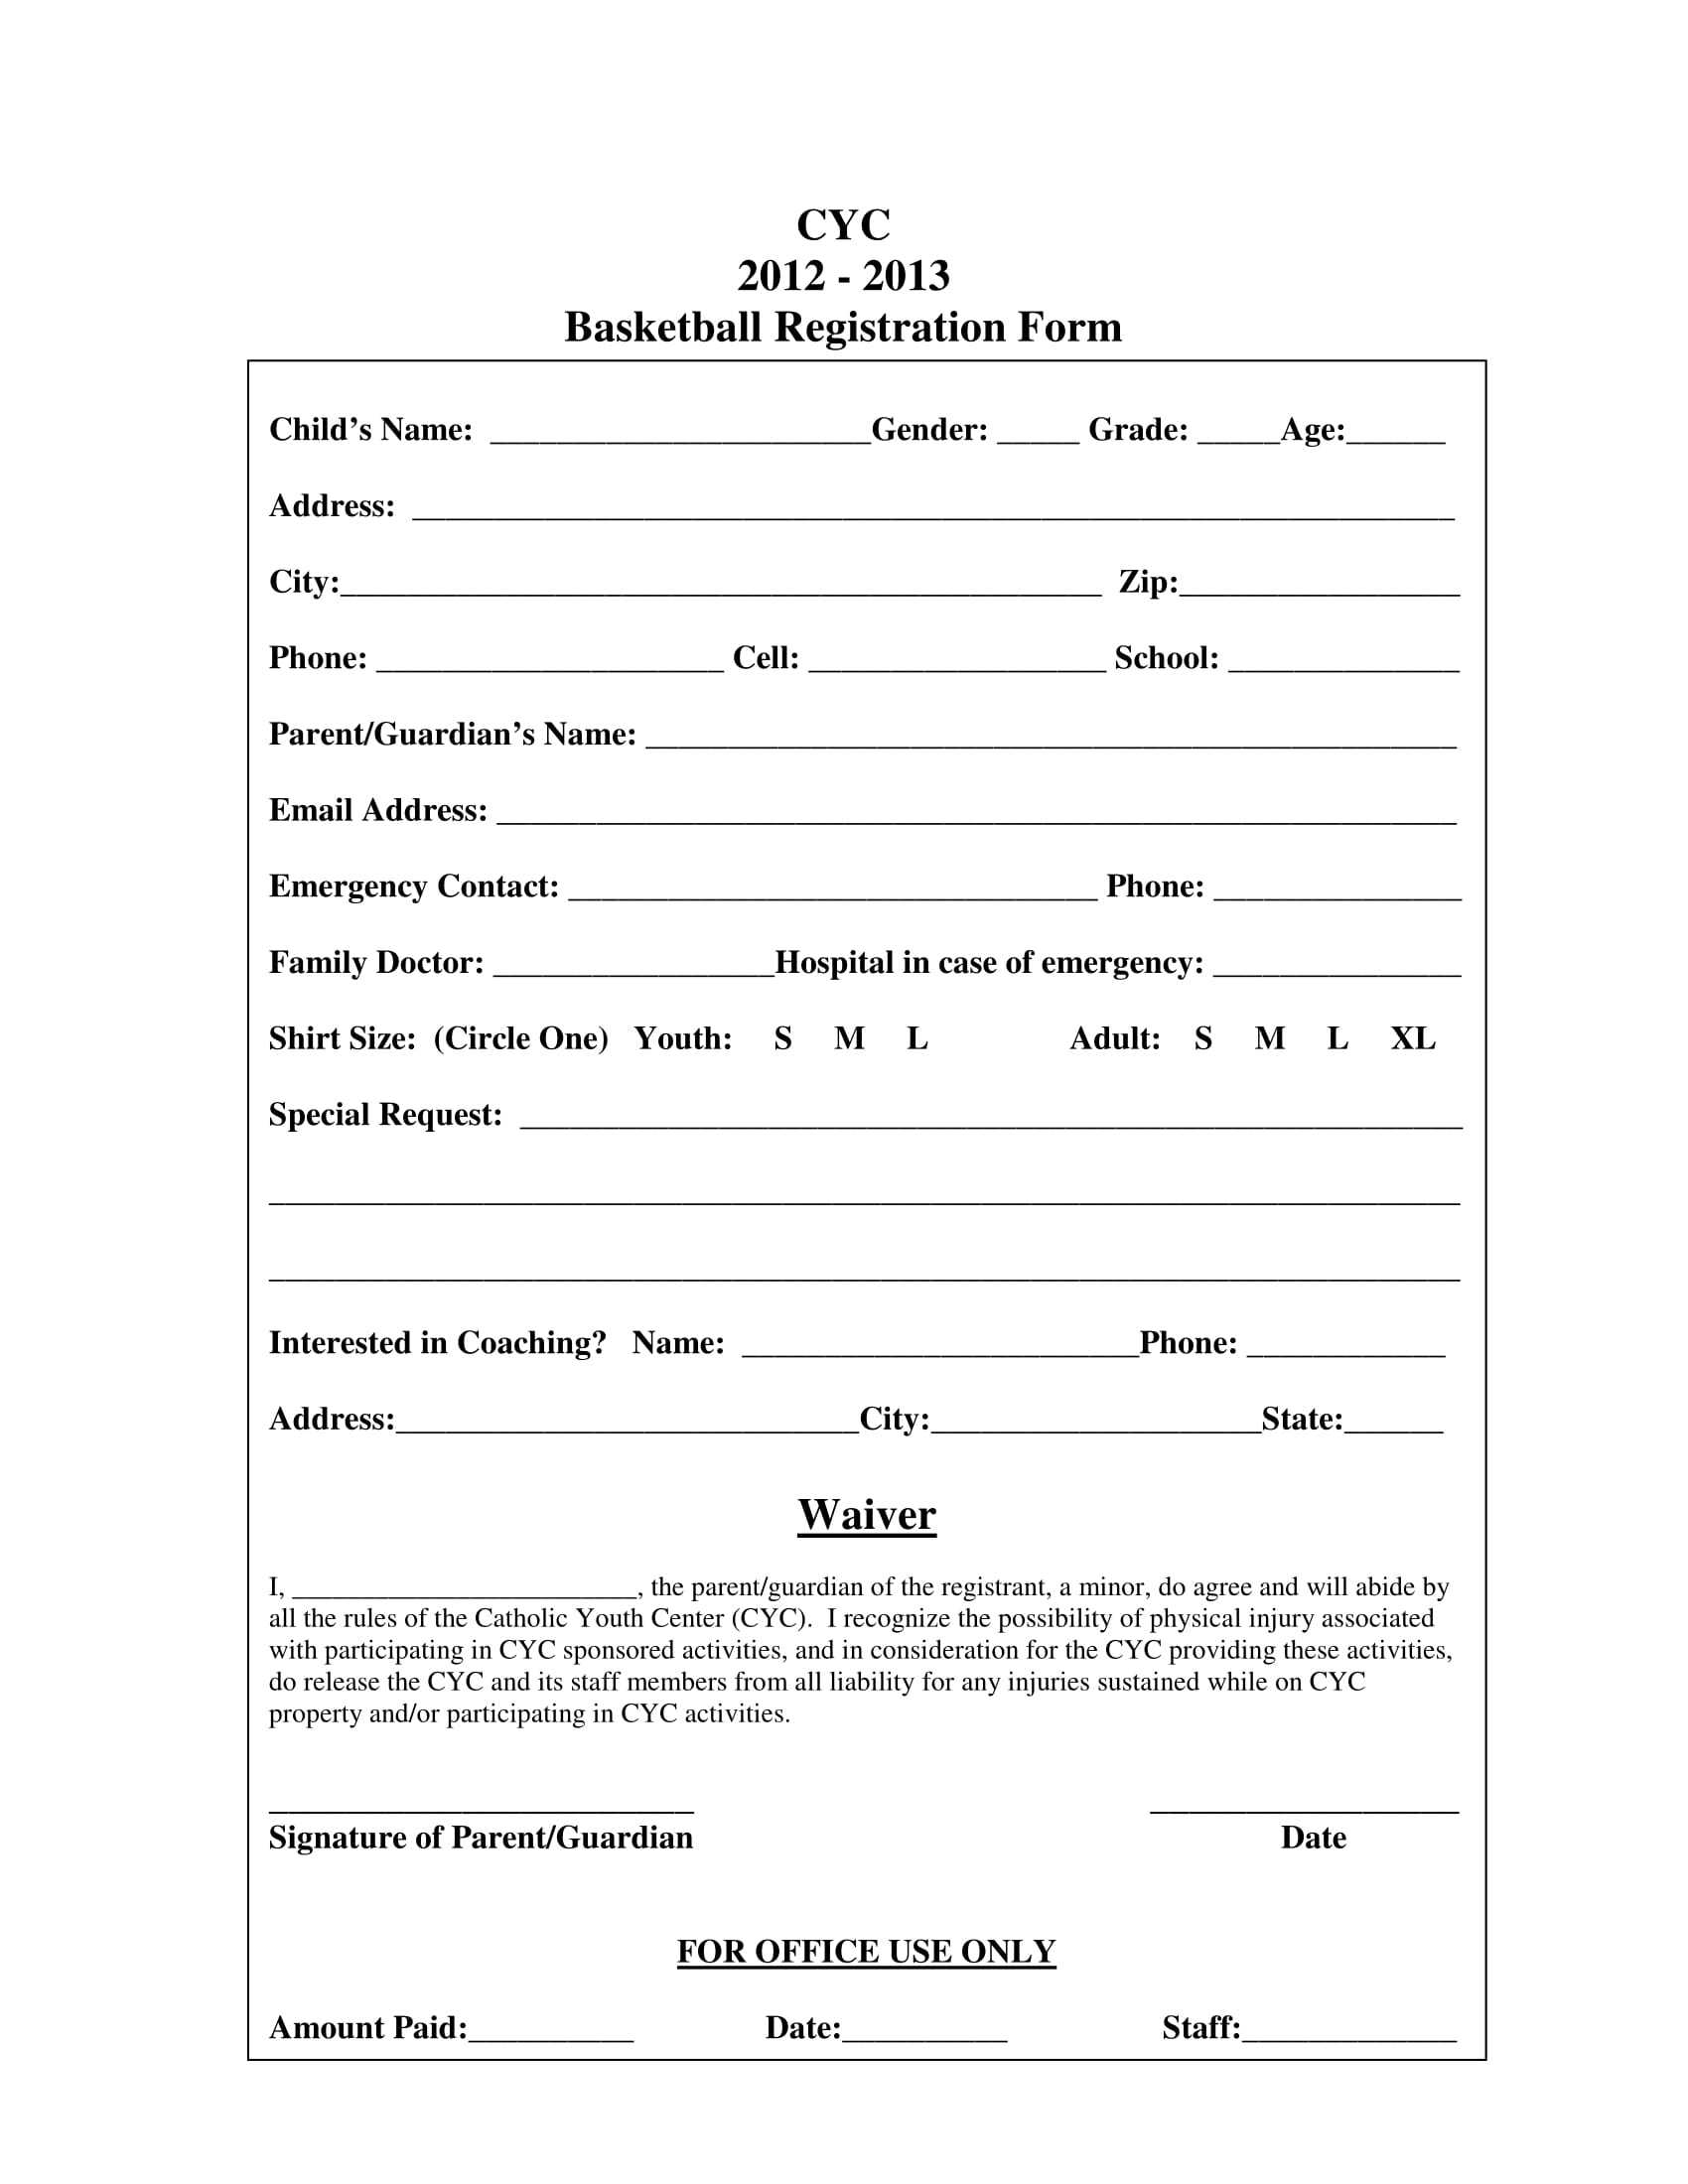 Basketball Registration Form Template Word – Dalep Within School Registration Form Template Word